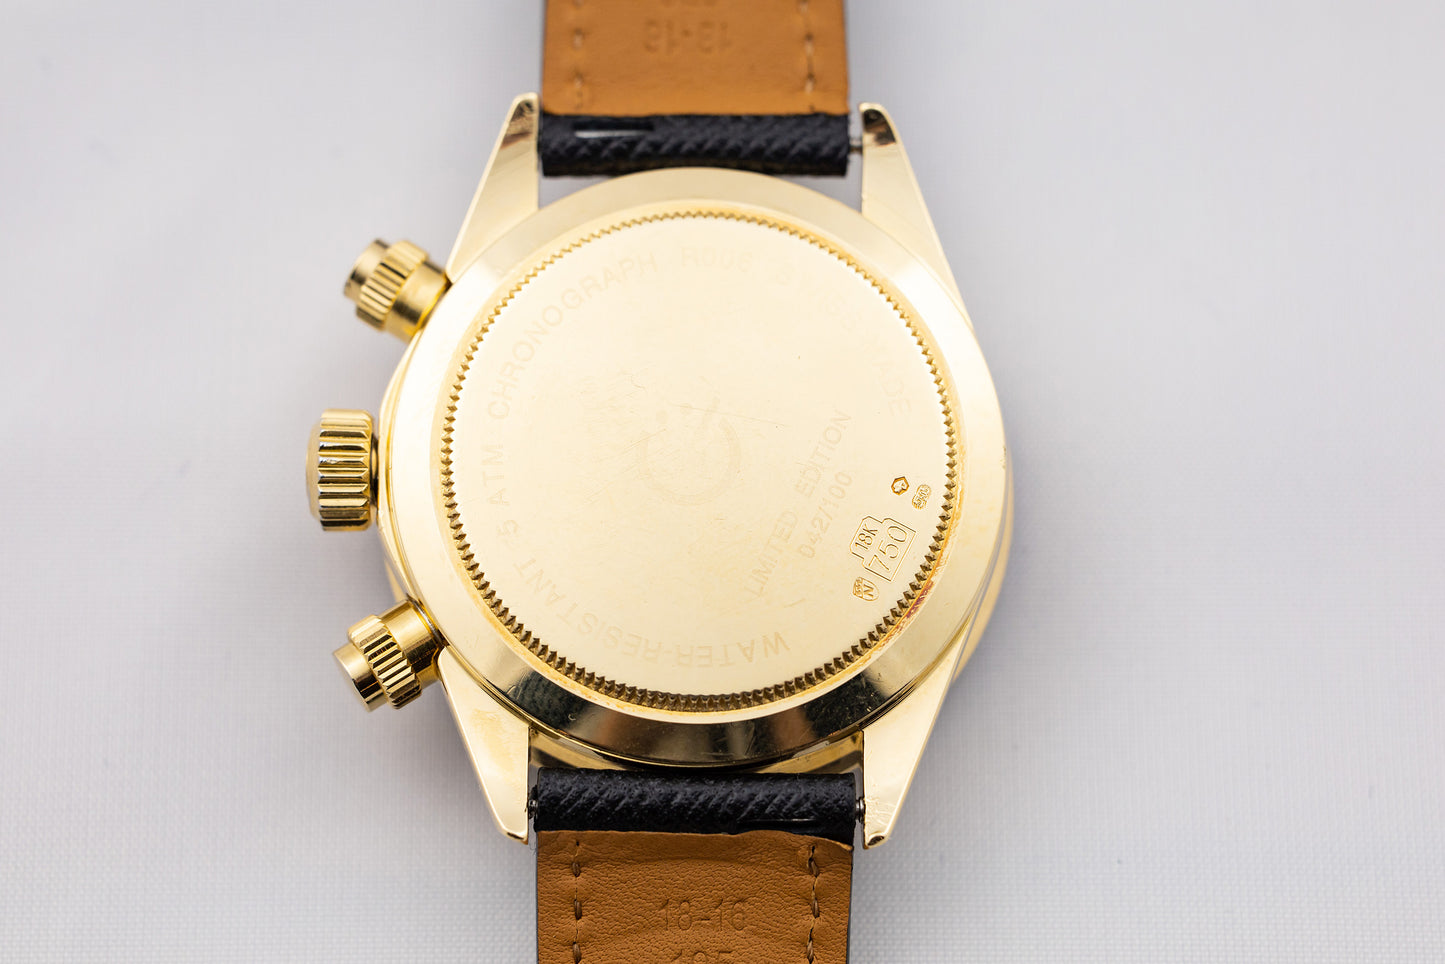 Gevril 18K Tribeca Chronograph “Paul Newman” Full Set, 1 of 100